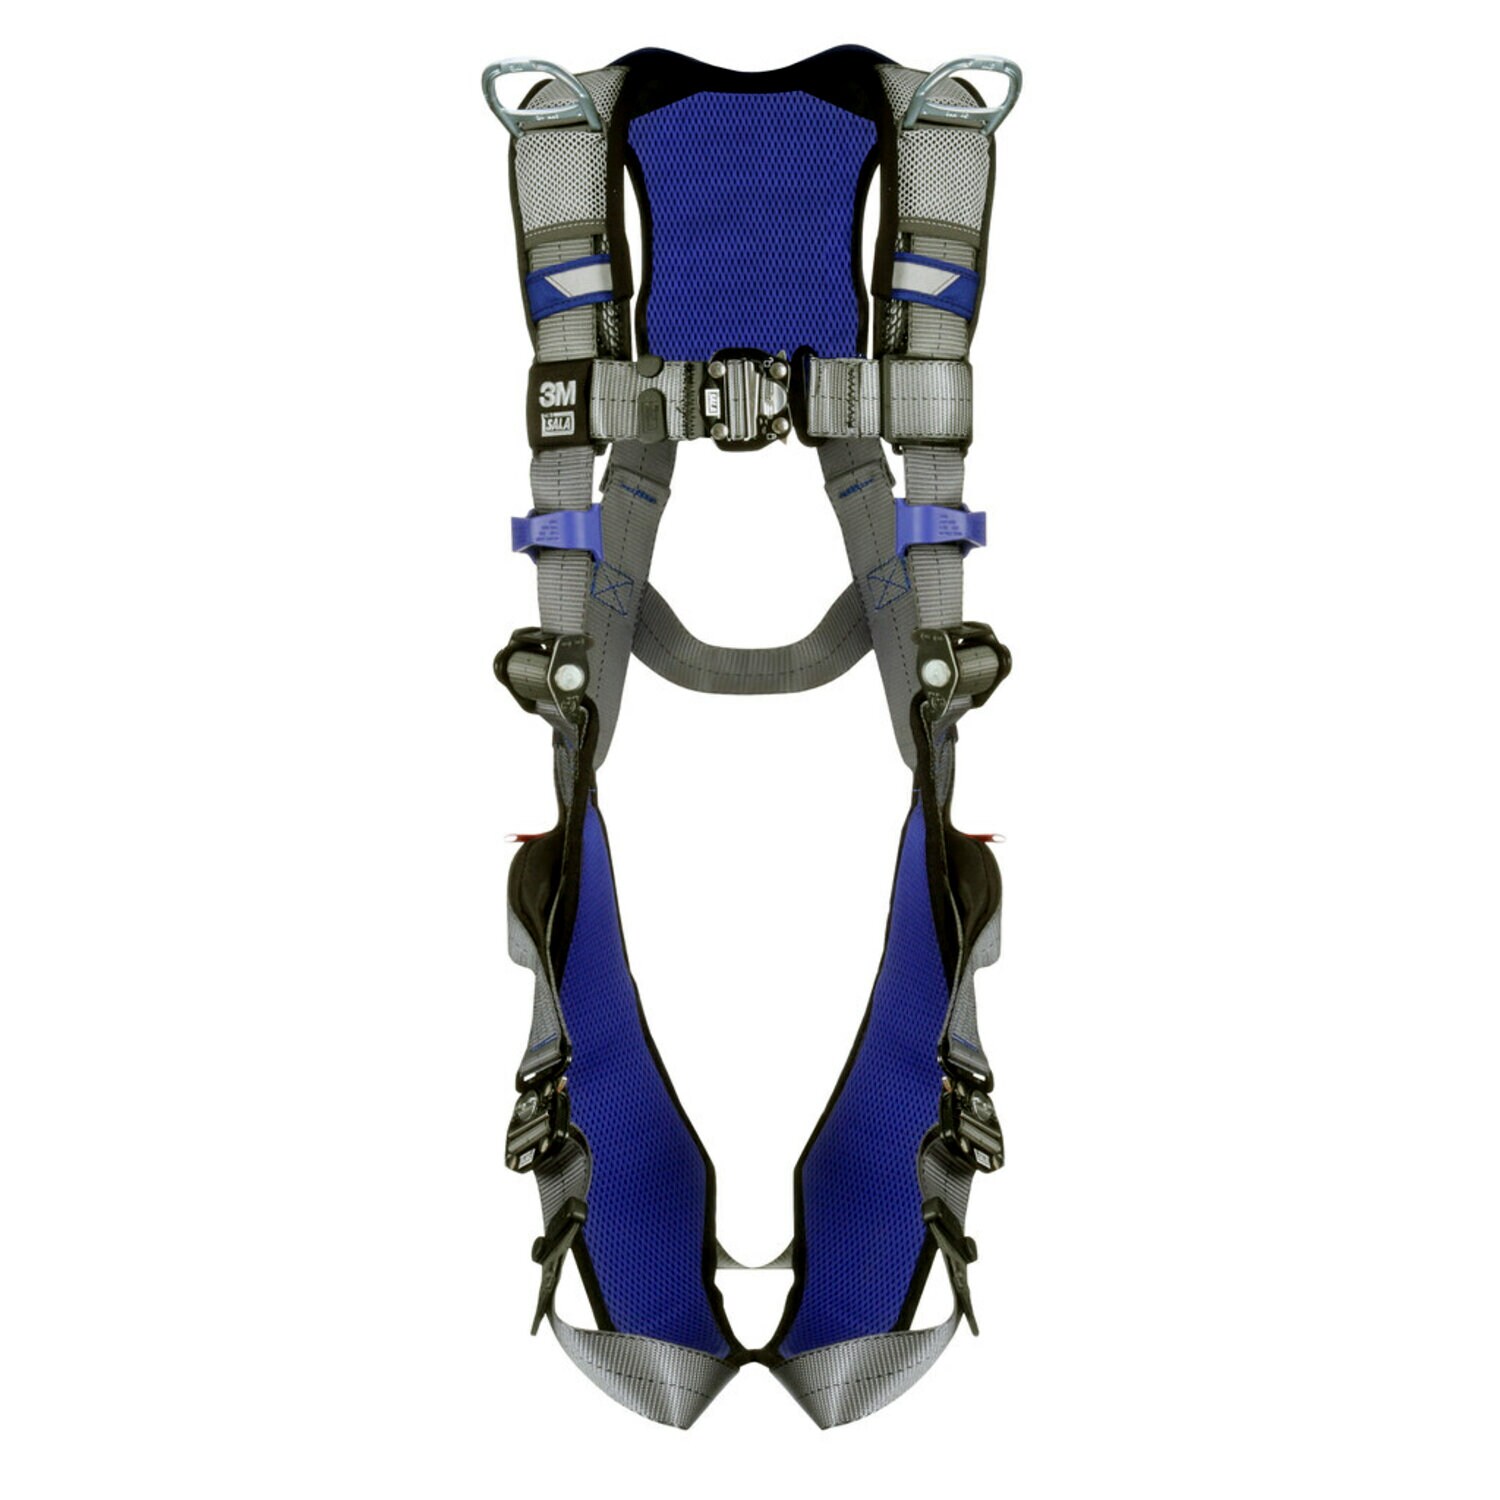 7012817896 - 3M DBI-SALA ExoFit X200 Comfort Vest Retrieval Safety Harness 1402145, Small